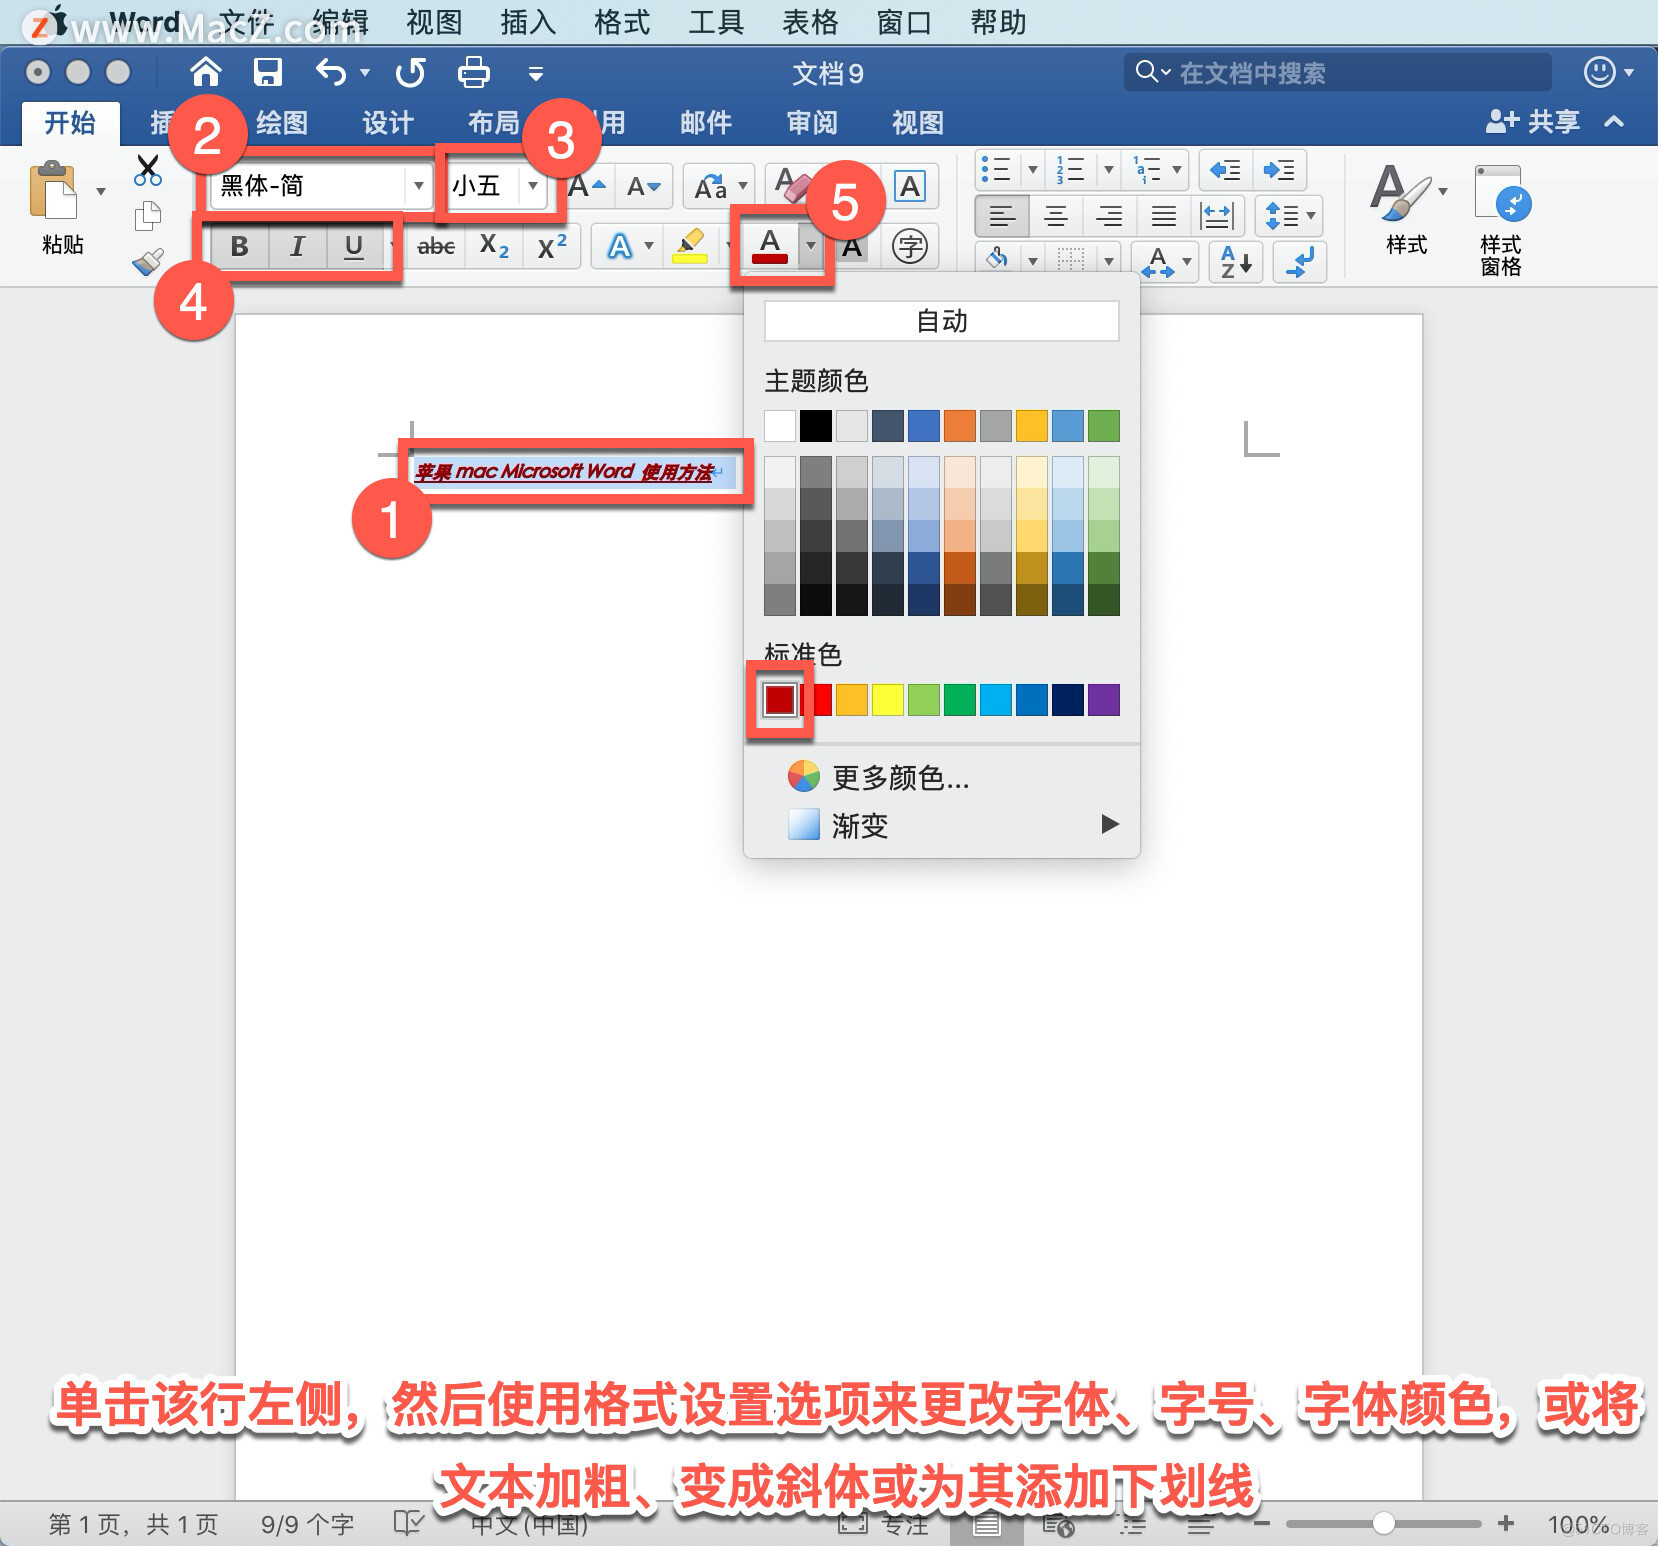 Microsoft Word教程「1」，如何在 Word 中创建文档、添加和编辑文本？_字体颜色_08